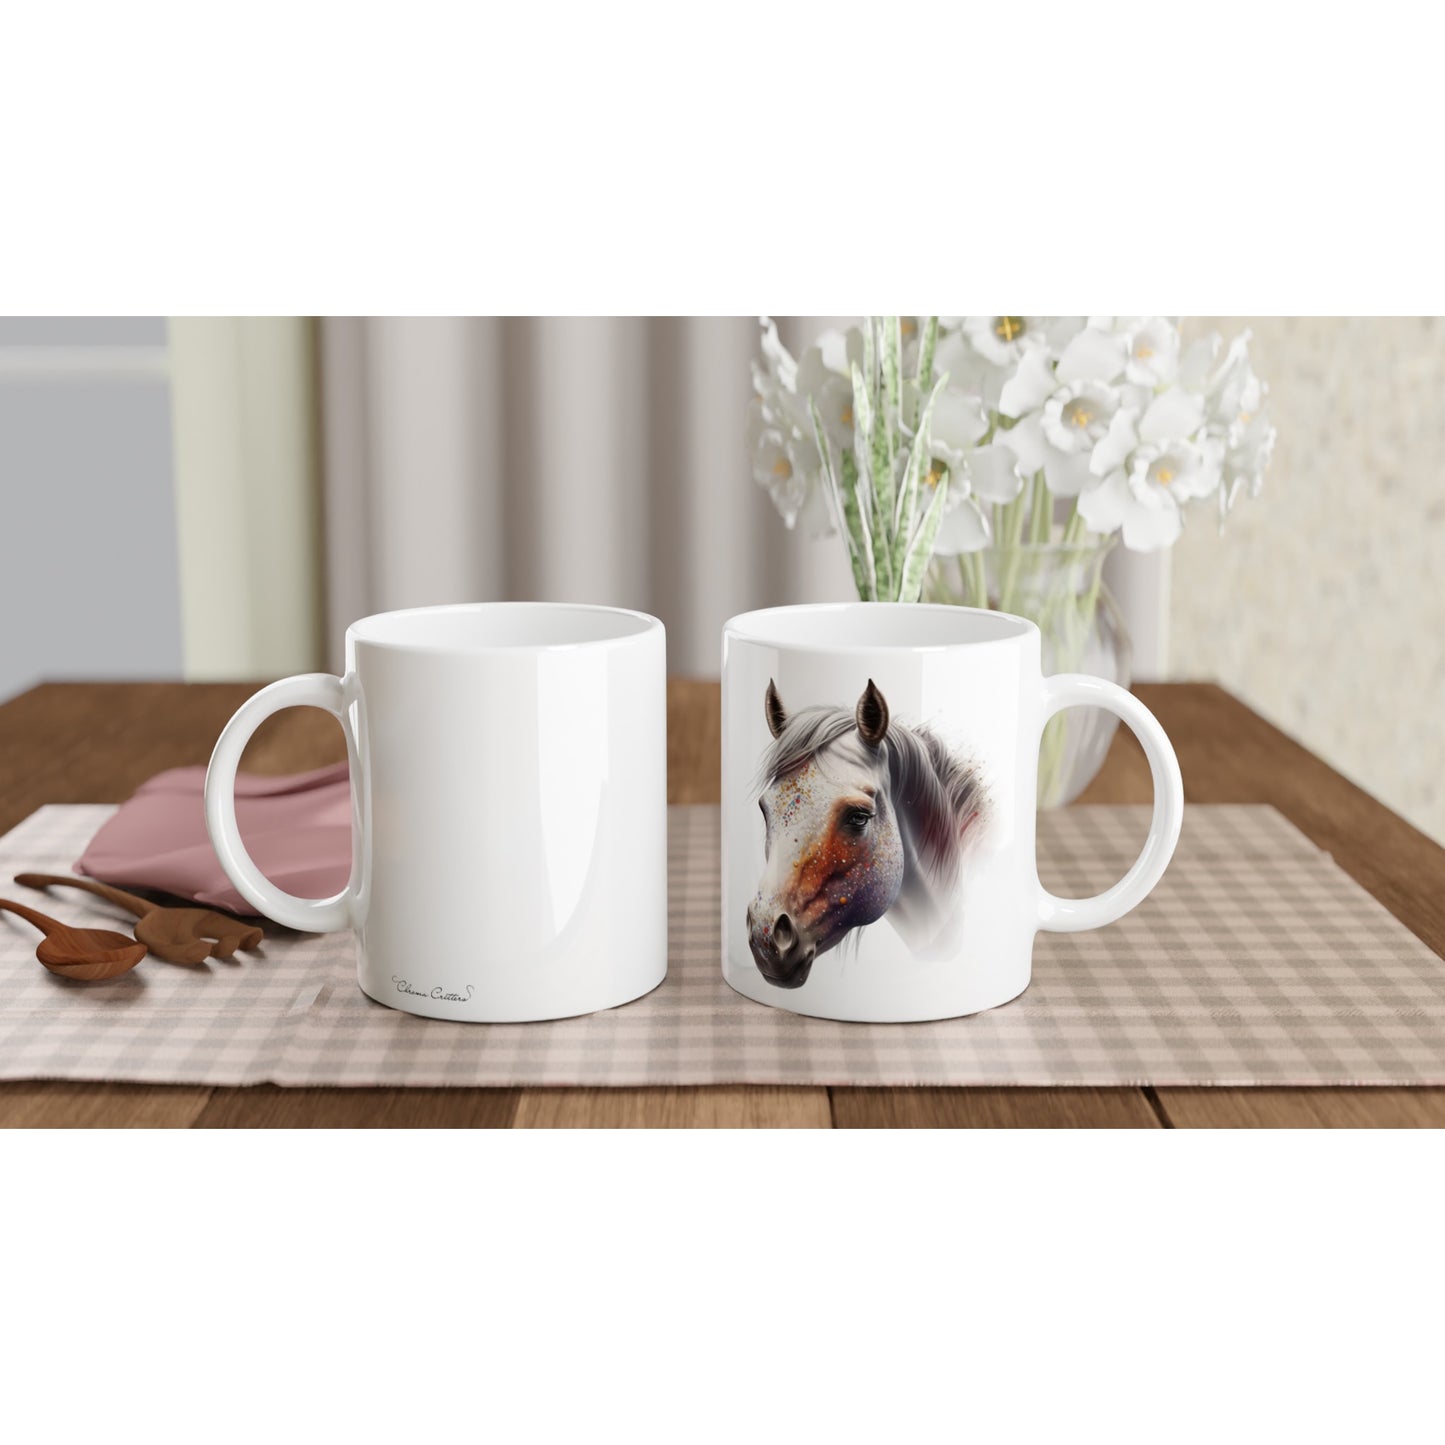 Shiny and Peaceful Fantasy Horse - 11oz Ceramic Mug